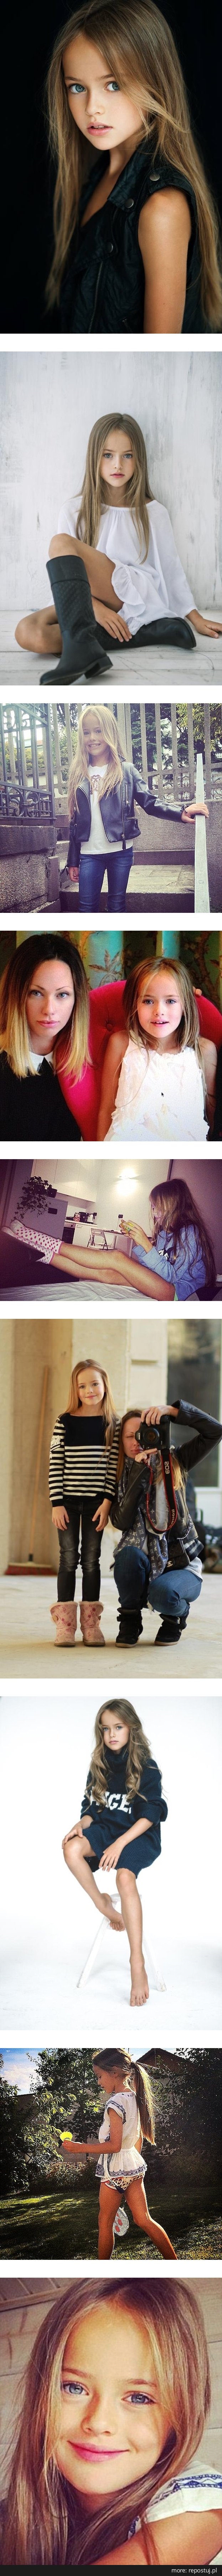 Kristina Pimenova - 9-letnia modelka Obrazki   